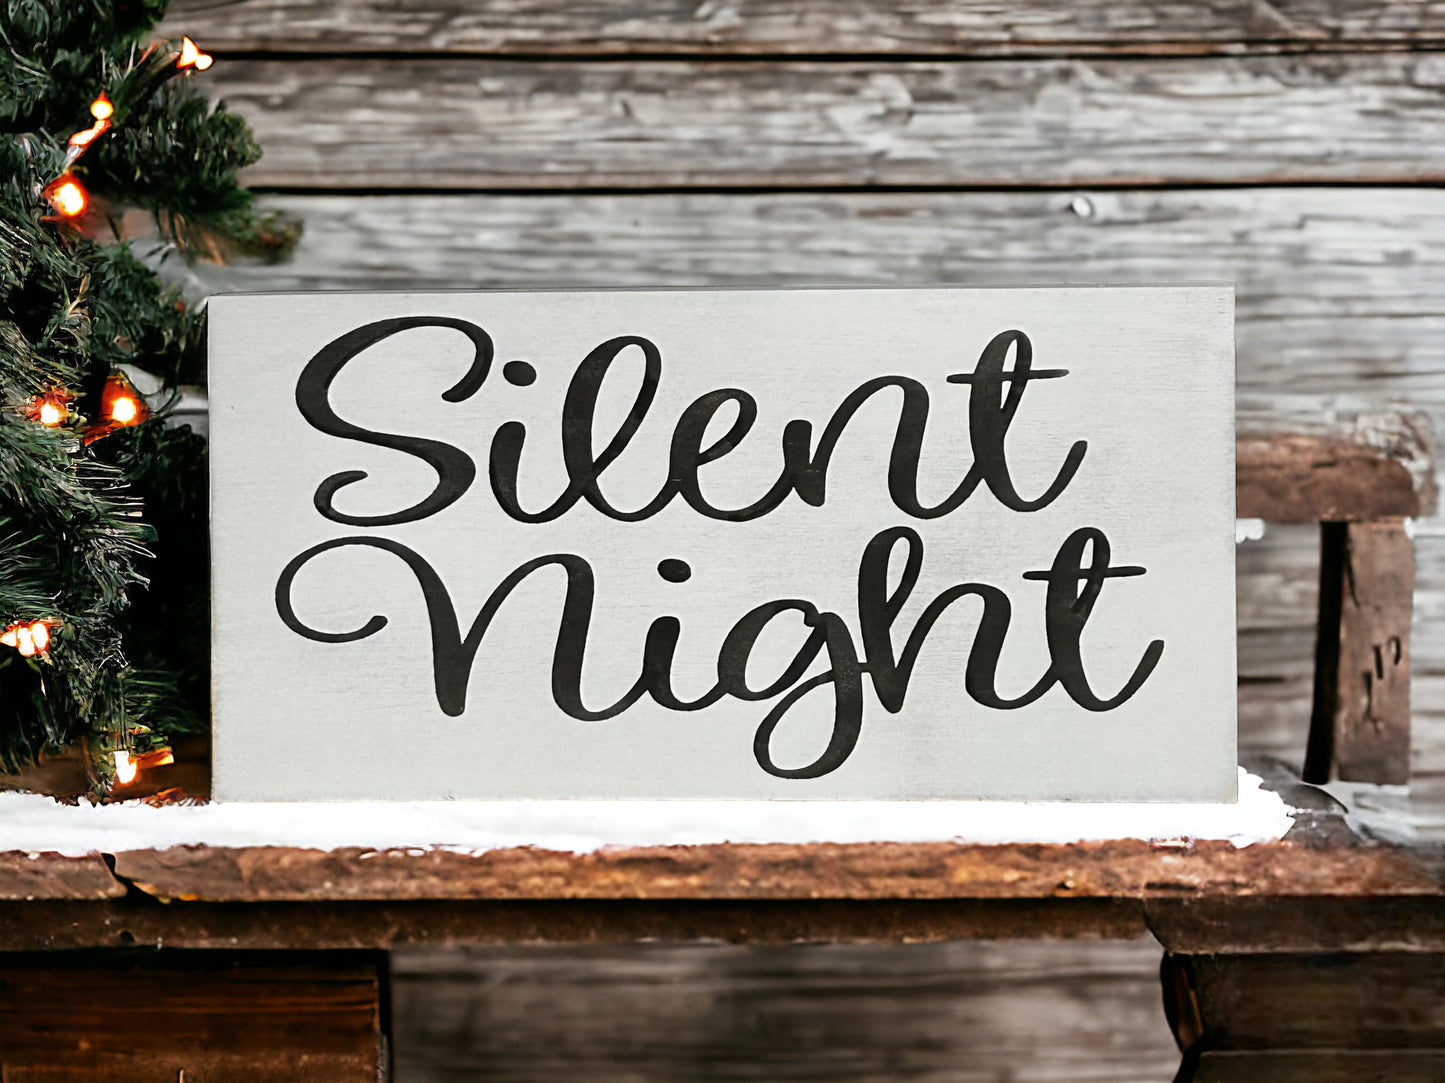 Silent Night - Rustic Wood Holiday Shelf Sitter